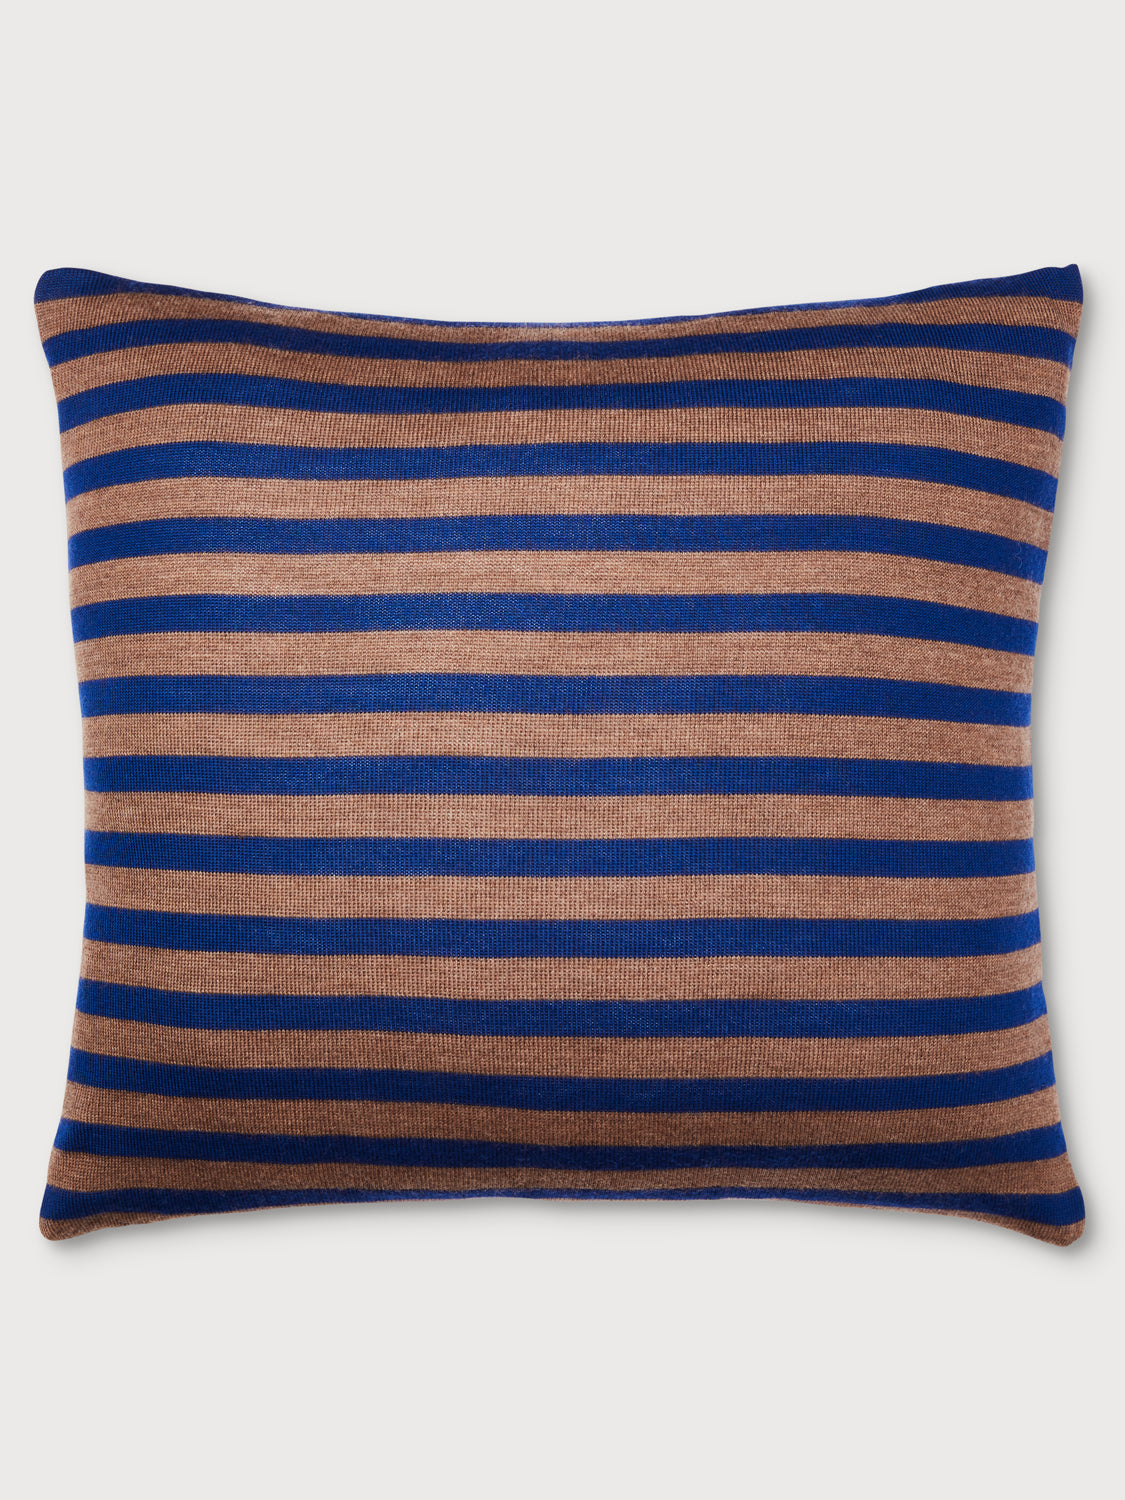 Striped Dark Navy and Caramel Brown Cushion